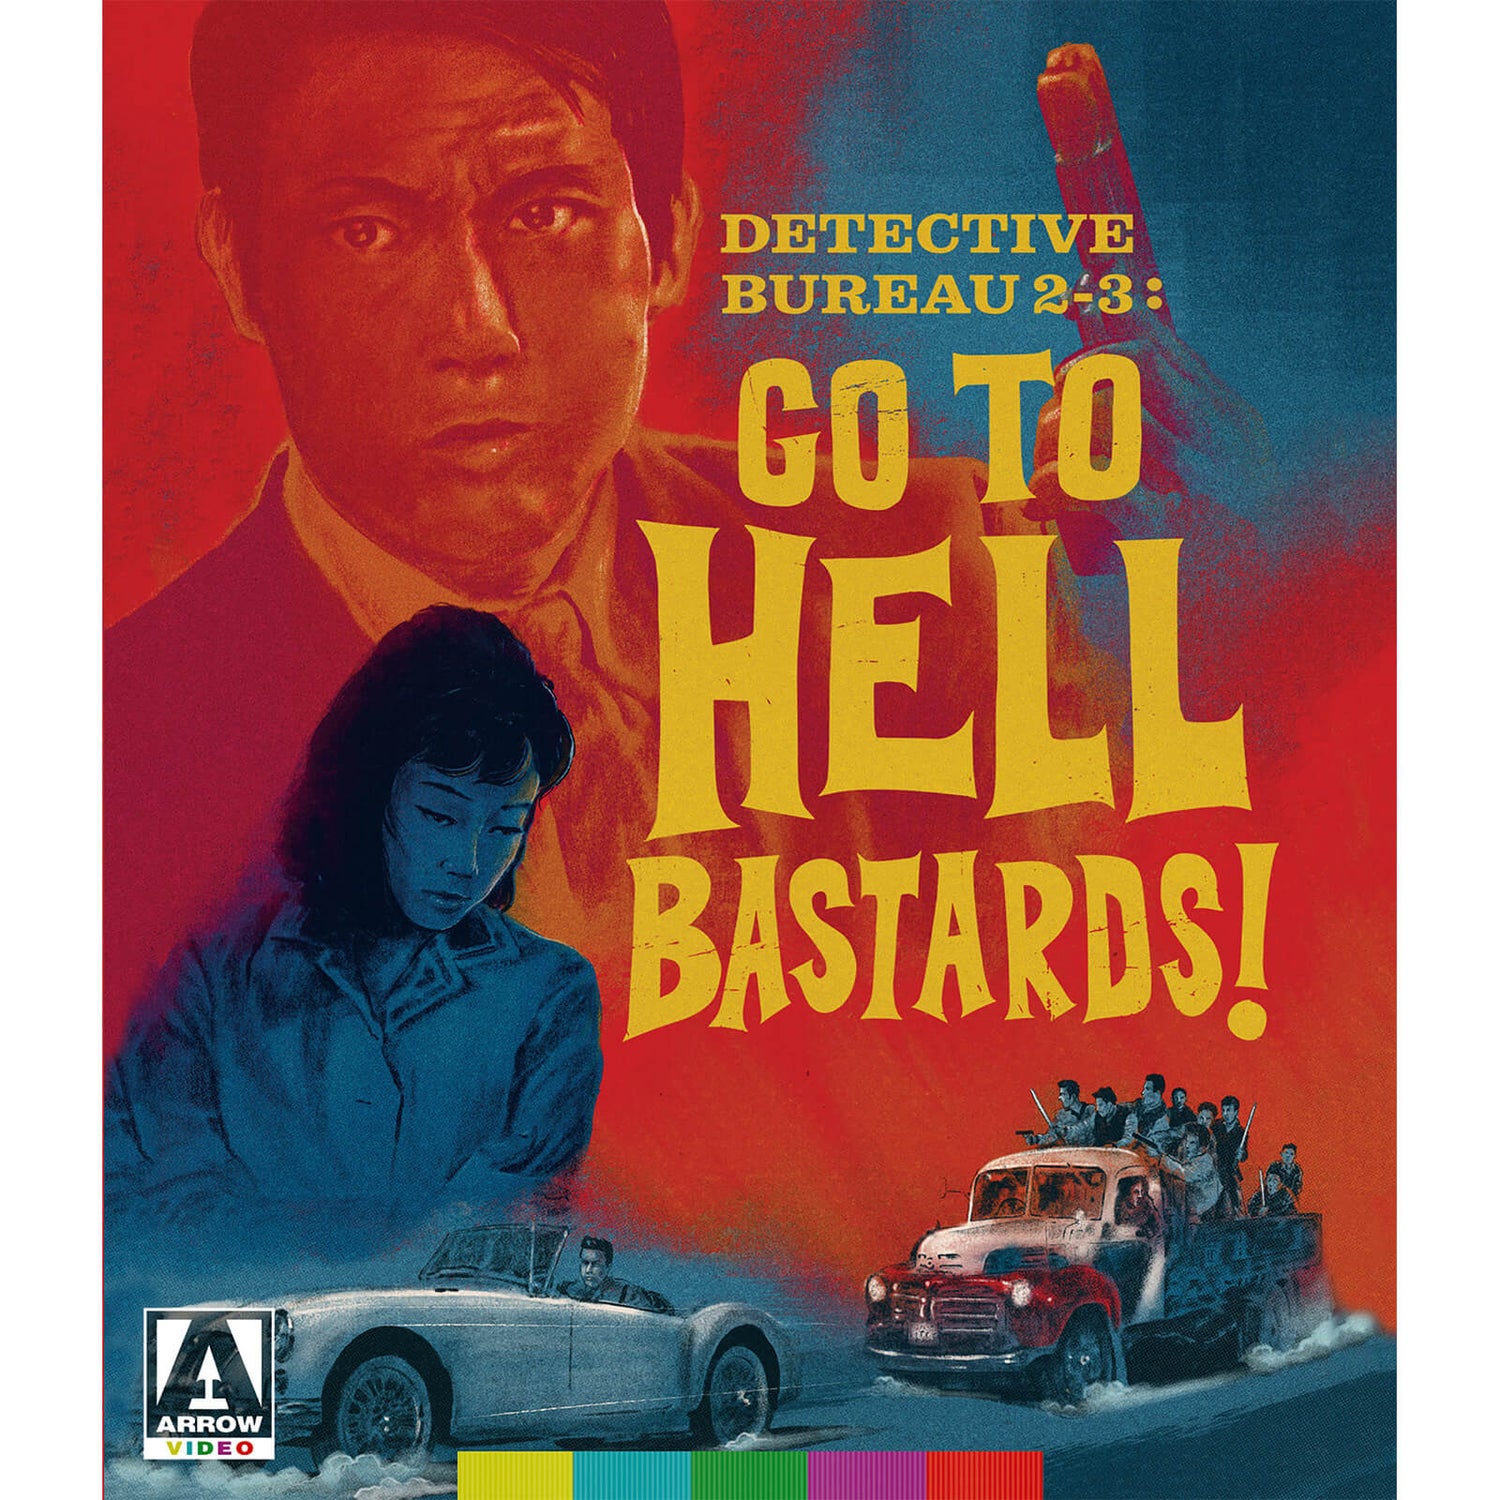 Detective Bureau 2-3: Go To Hell Bastards! Blu-ray